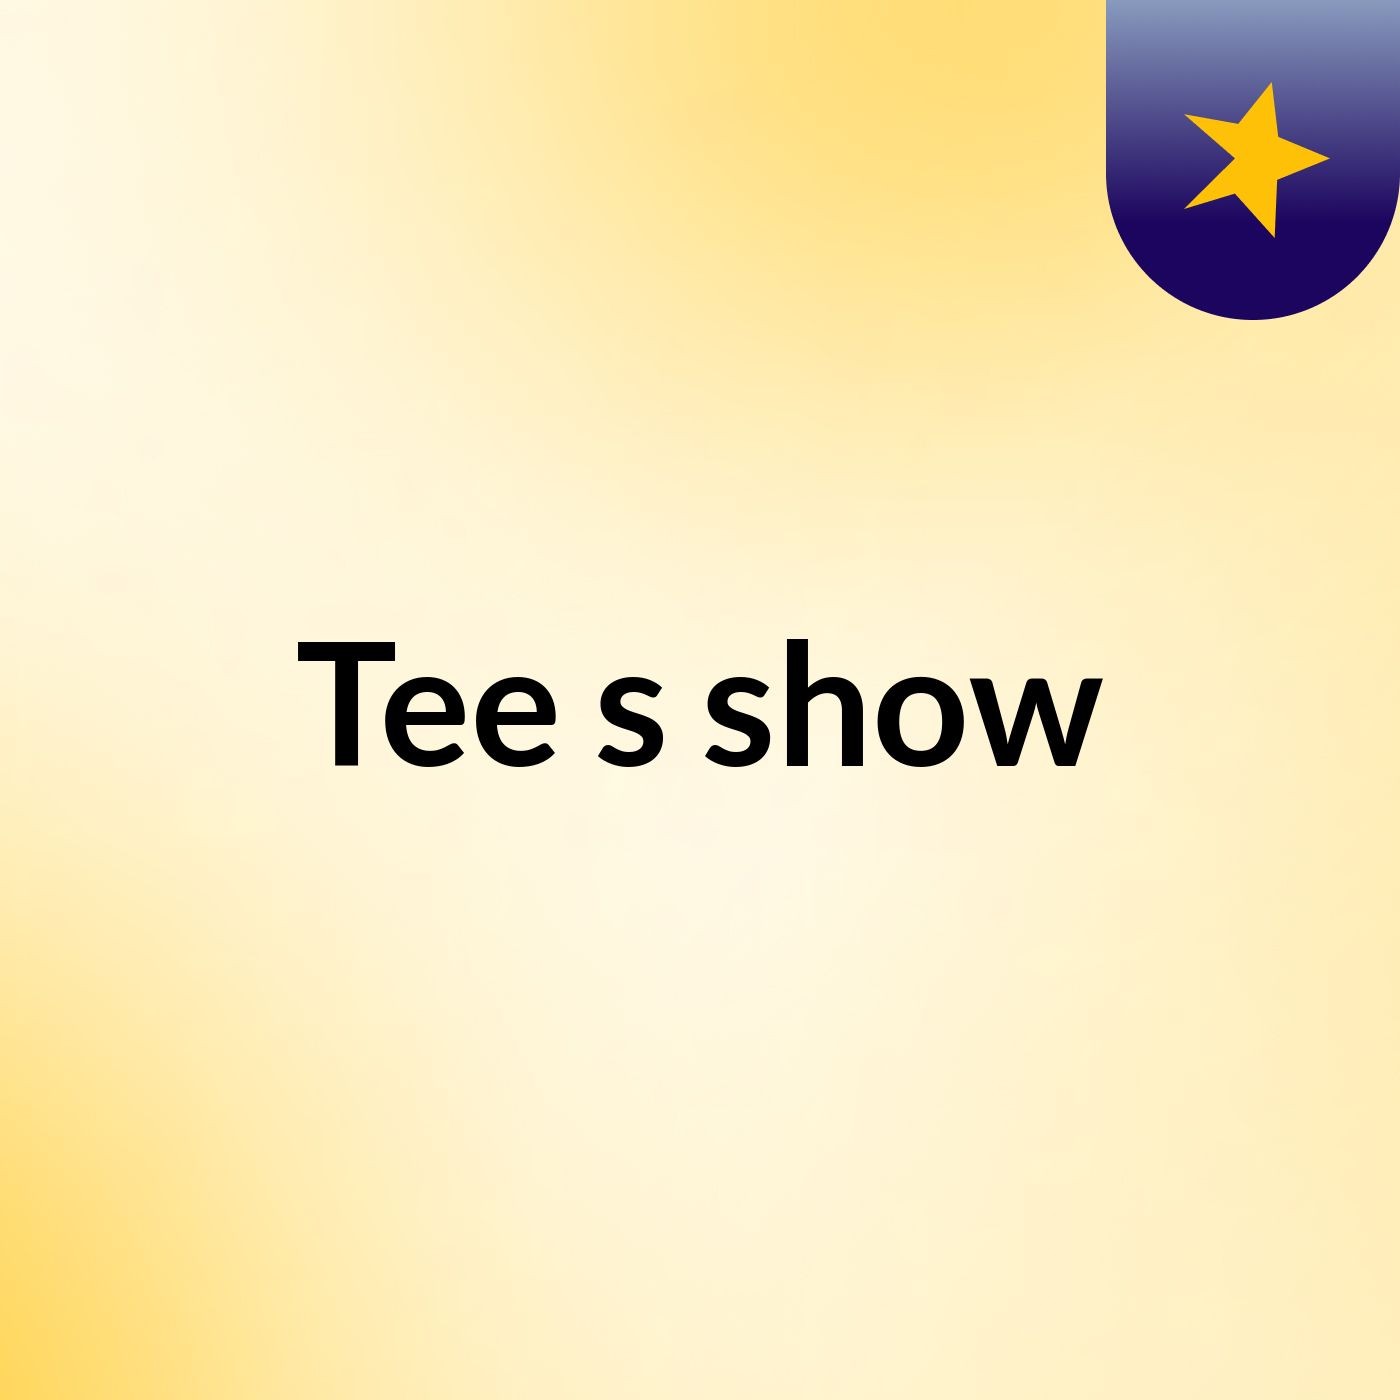 Tee's show